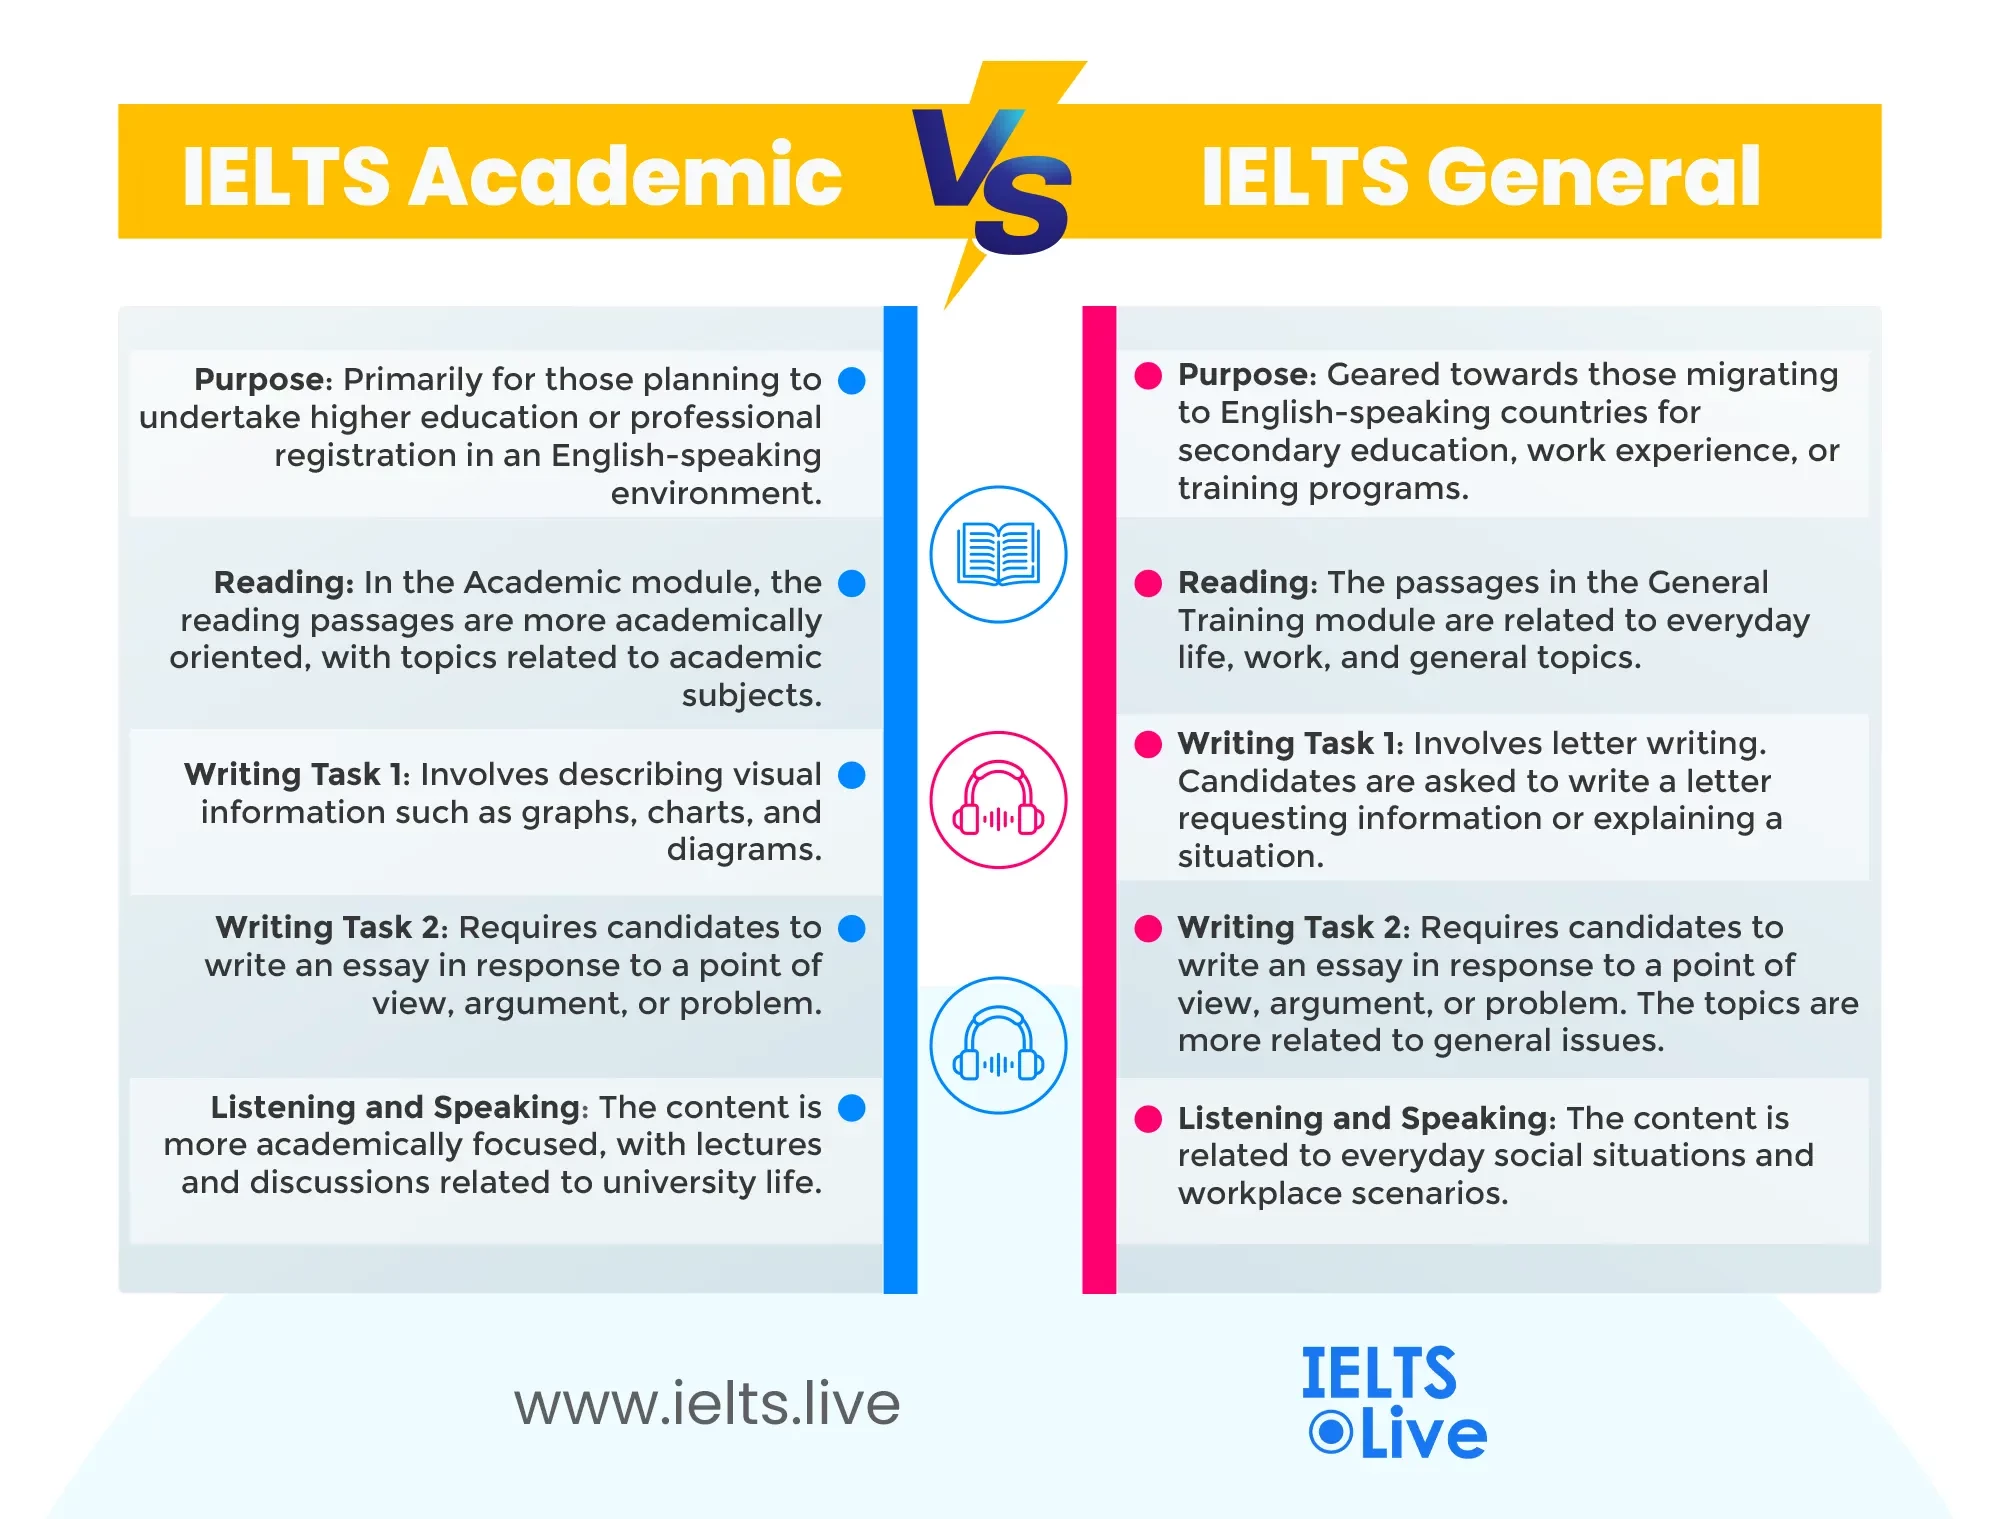 IELTS Academic vs General Training